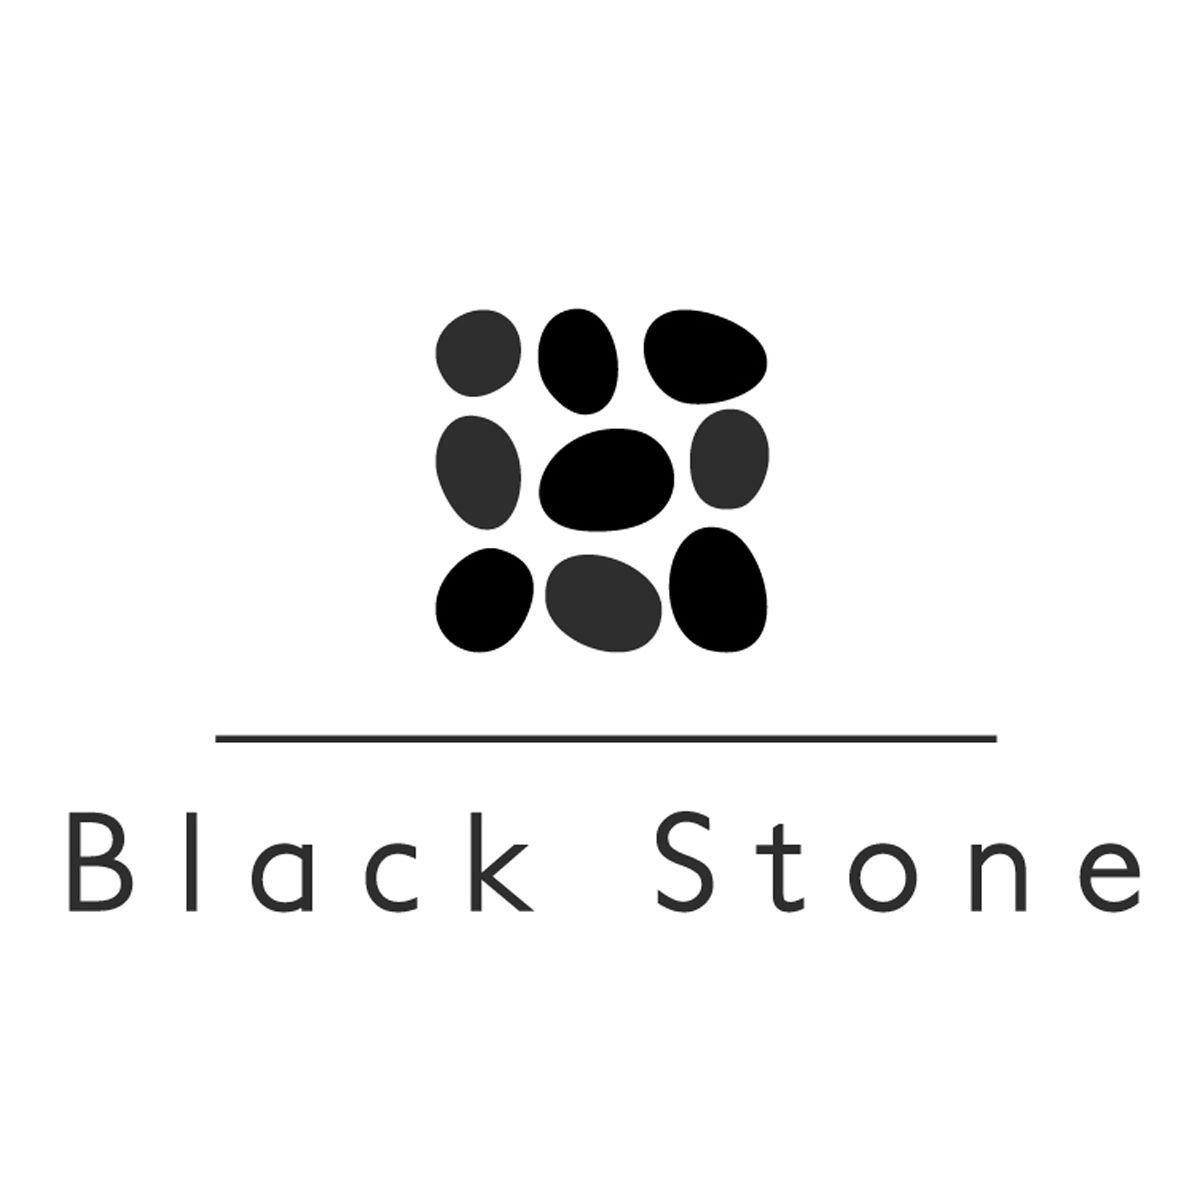 Логотип stone. Логотип камешки. Логотип натуральный камень. Искусственный камень логотип.